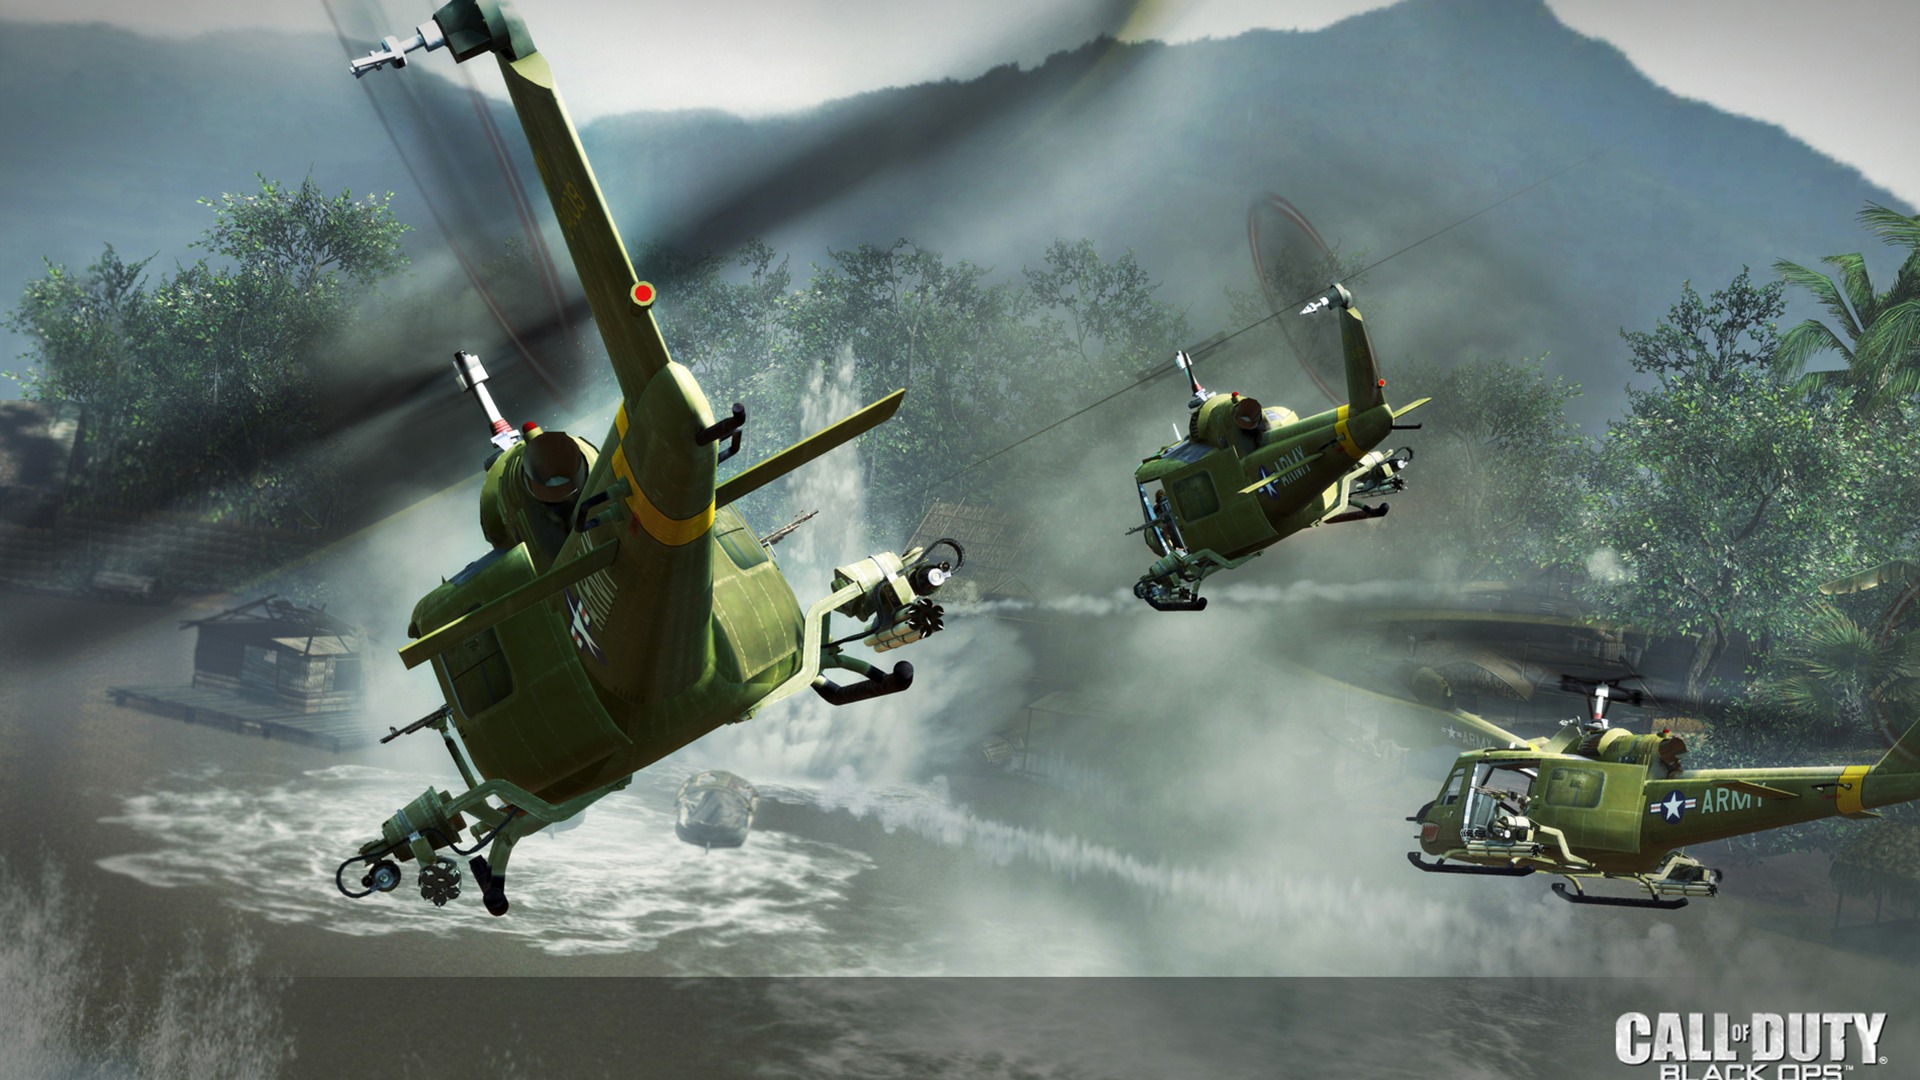 Call of Duty: Black Ops HD Wallpaper #13 - 1920x1080